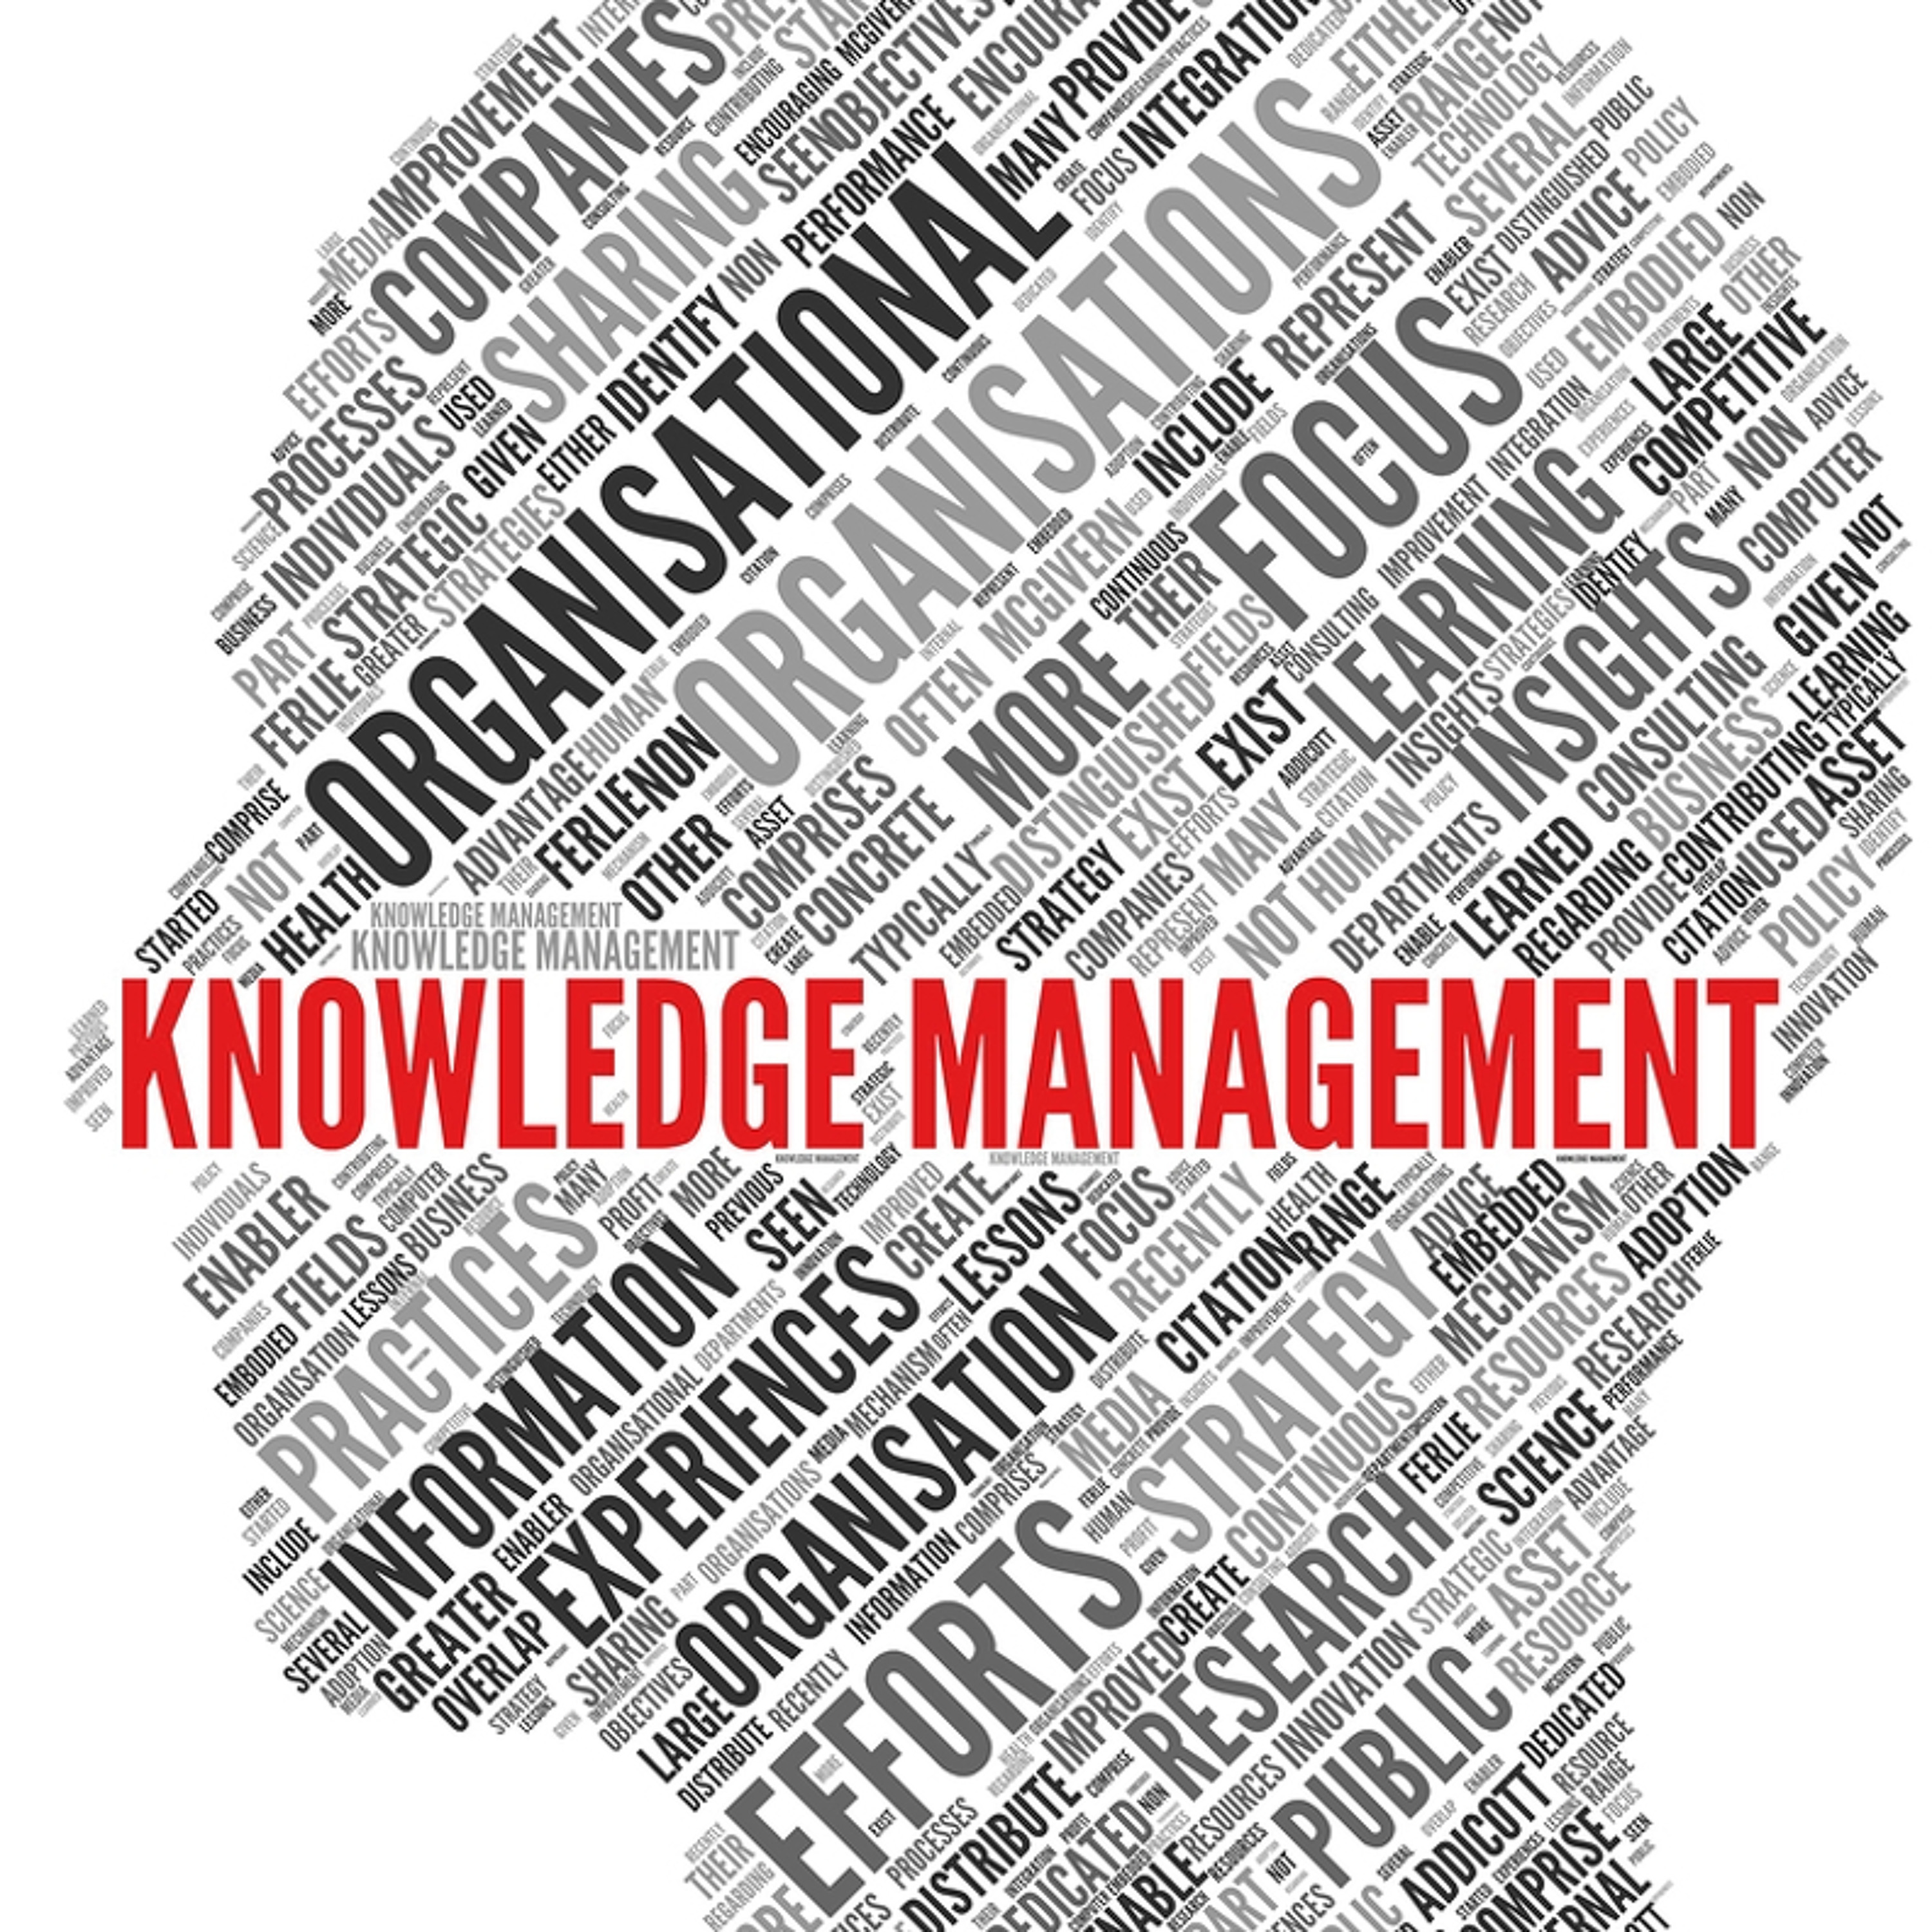 Управление знаниями необходимо для. Управление знаниями. Управление знаниями картинки. Knowledge Management. Управление знаниями в организации.